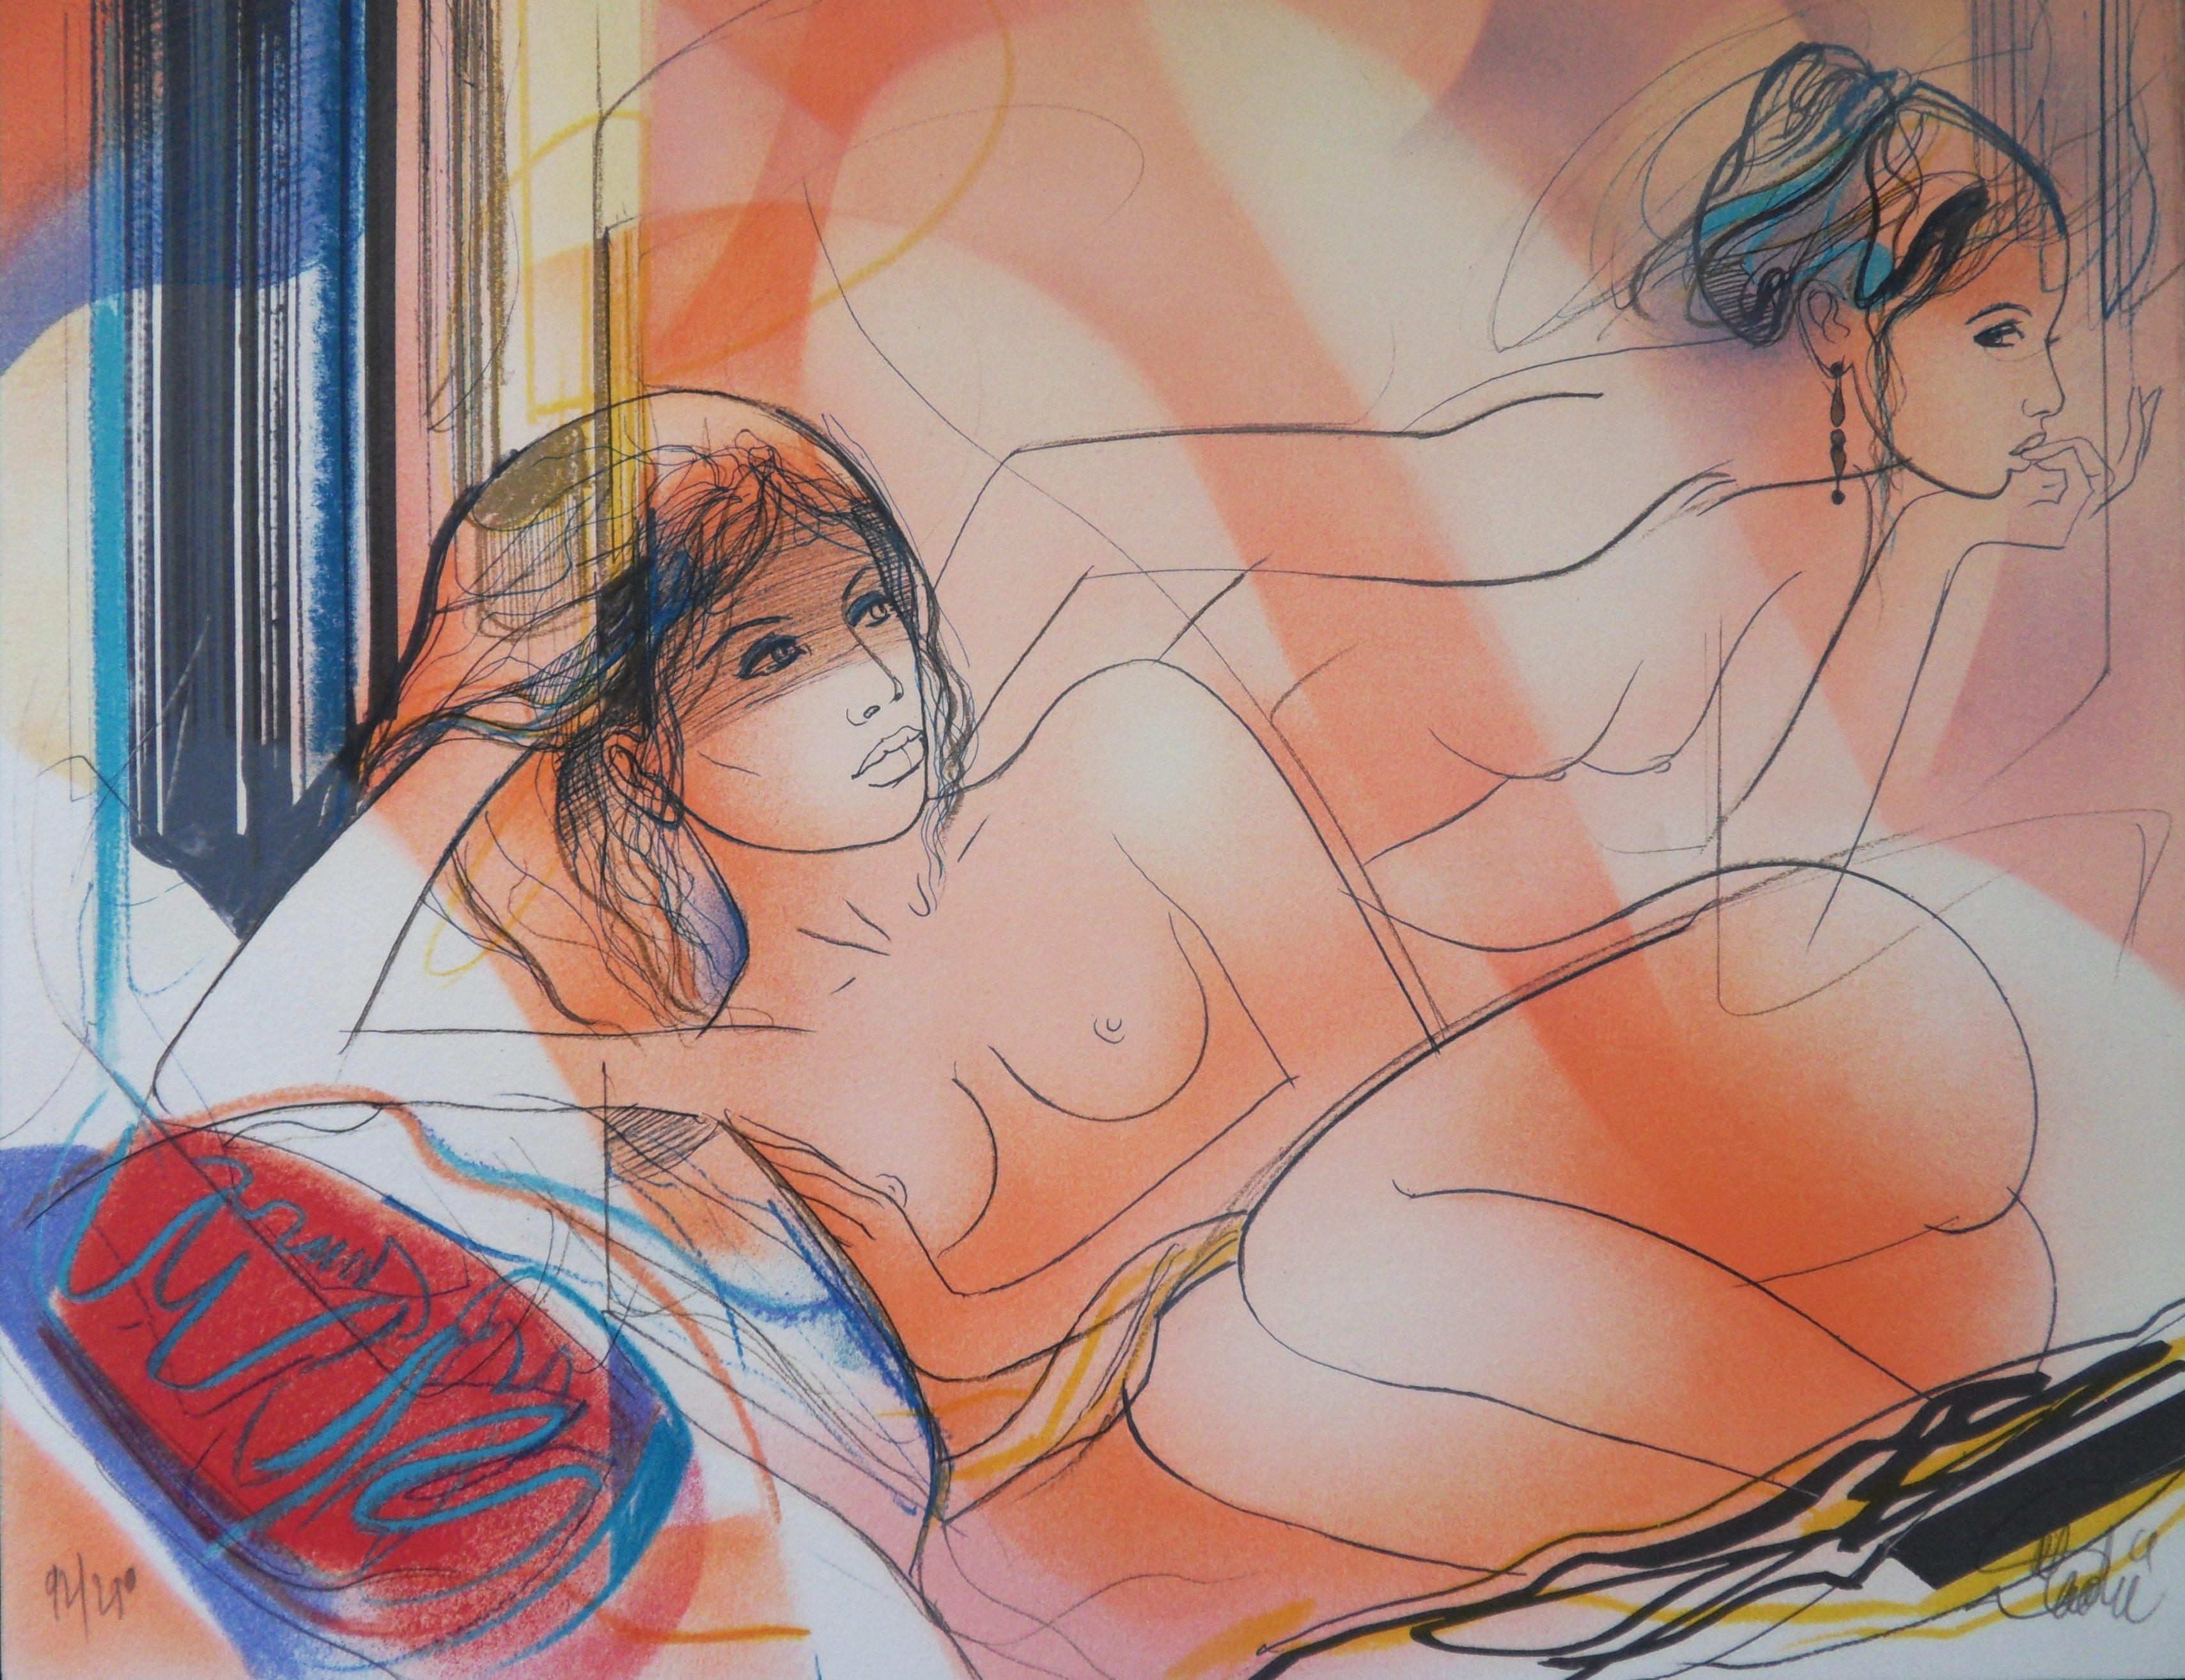 Jean-Baptiste Valadie Nude Print - Lazy Time - Original handsigned lithograph - Ltd 250